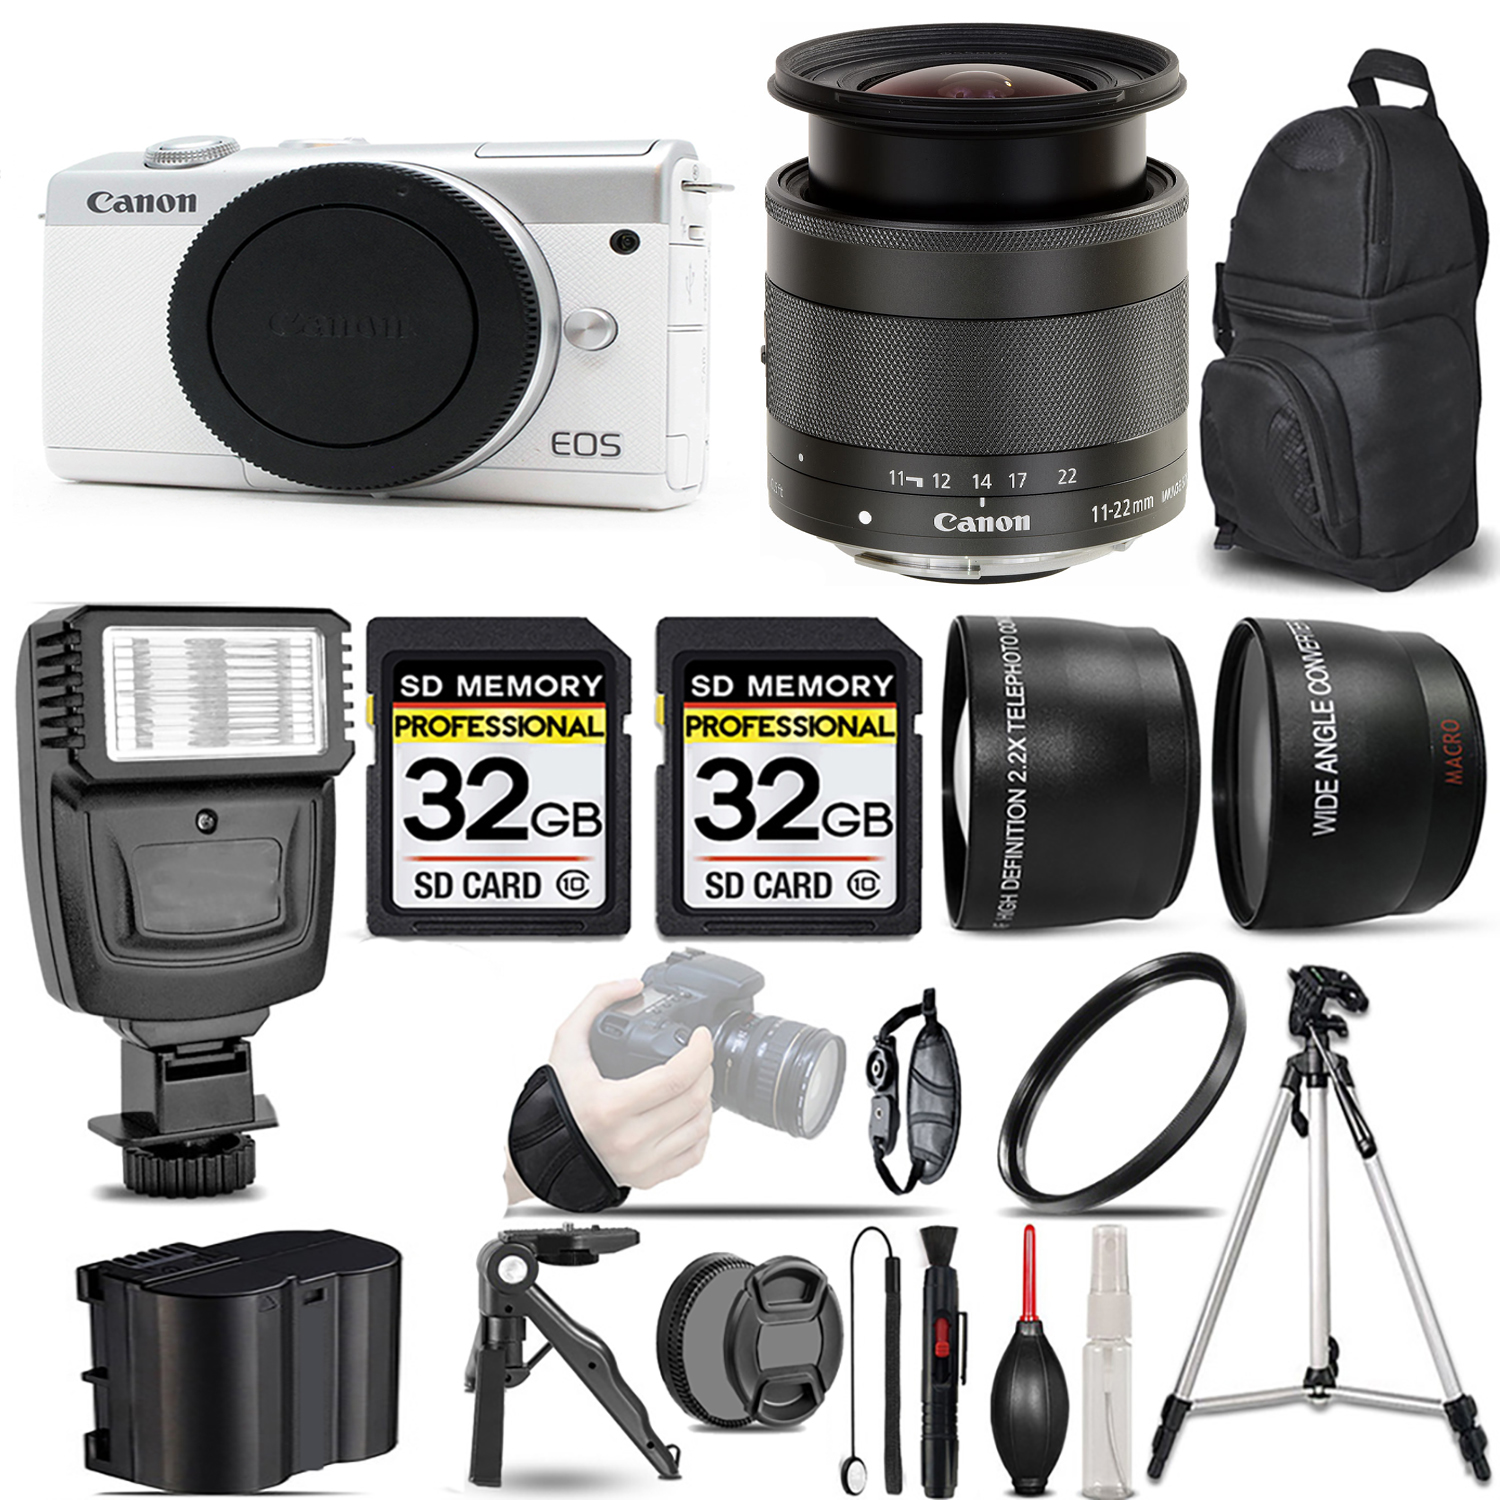 EOS M200  Camera (White) + 11-22mm f/4-5.6 IS STM Lens + Flash + 64GB - Kit *FREE SHIPPING*